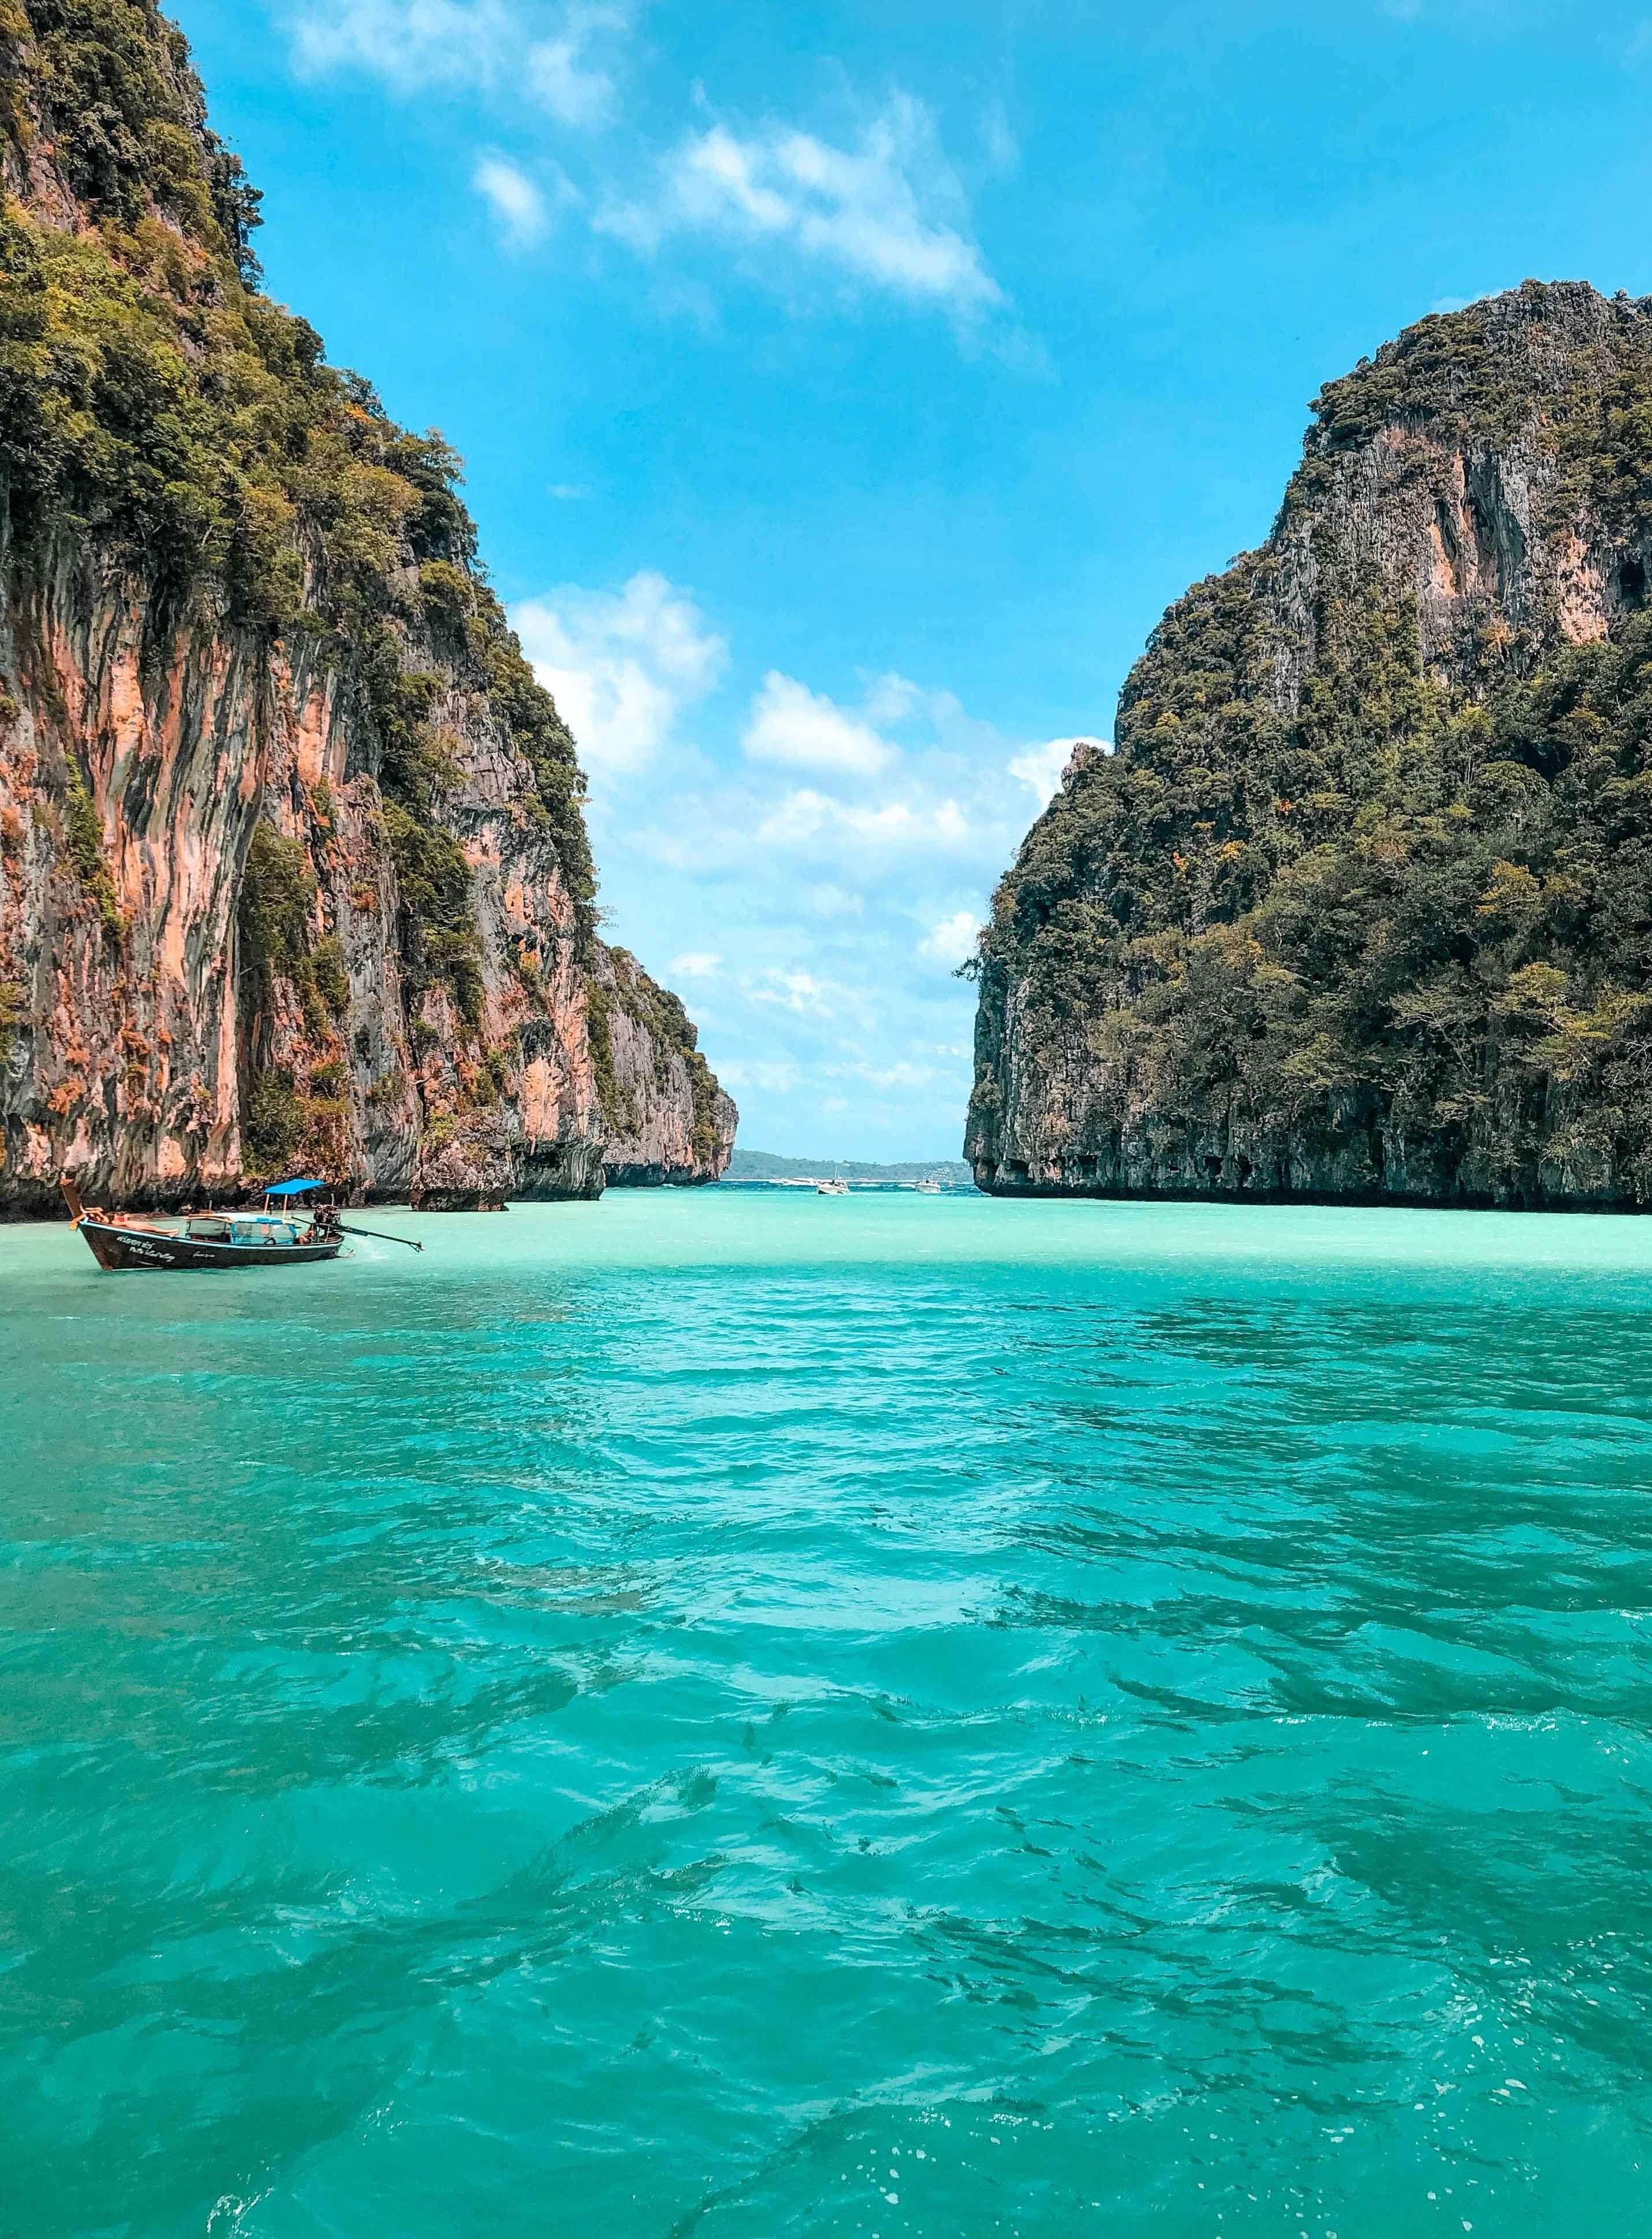 Thailand, Phuket, Urlaub, Asien, Travelguide, Reisebericht, Reisetipps, Sehenswürdigkeiten, Tipps, Katefully, Reiseblog, Travel, Phi Phi Island, Pullman Phuket